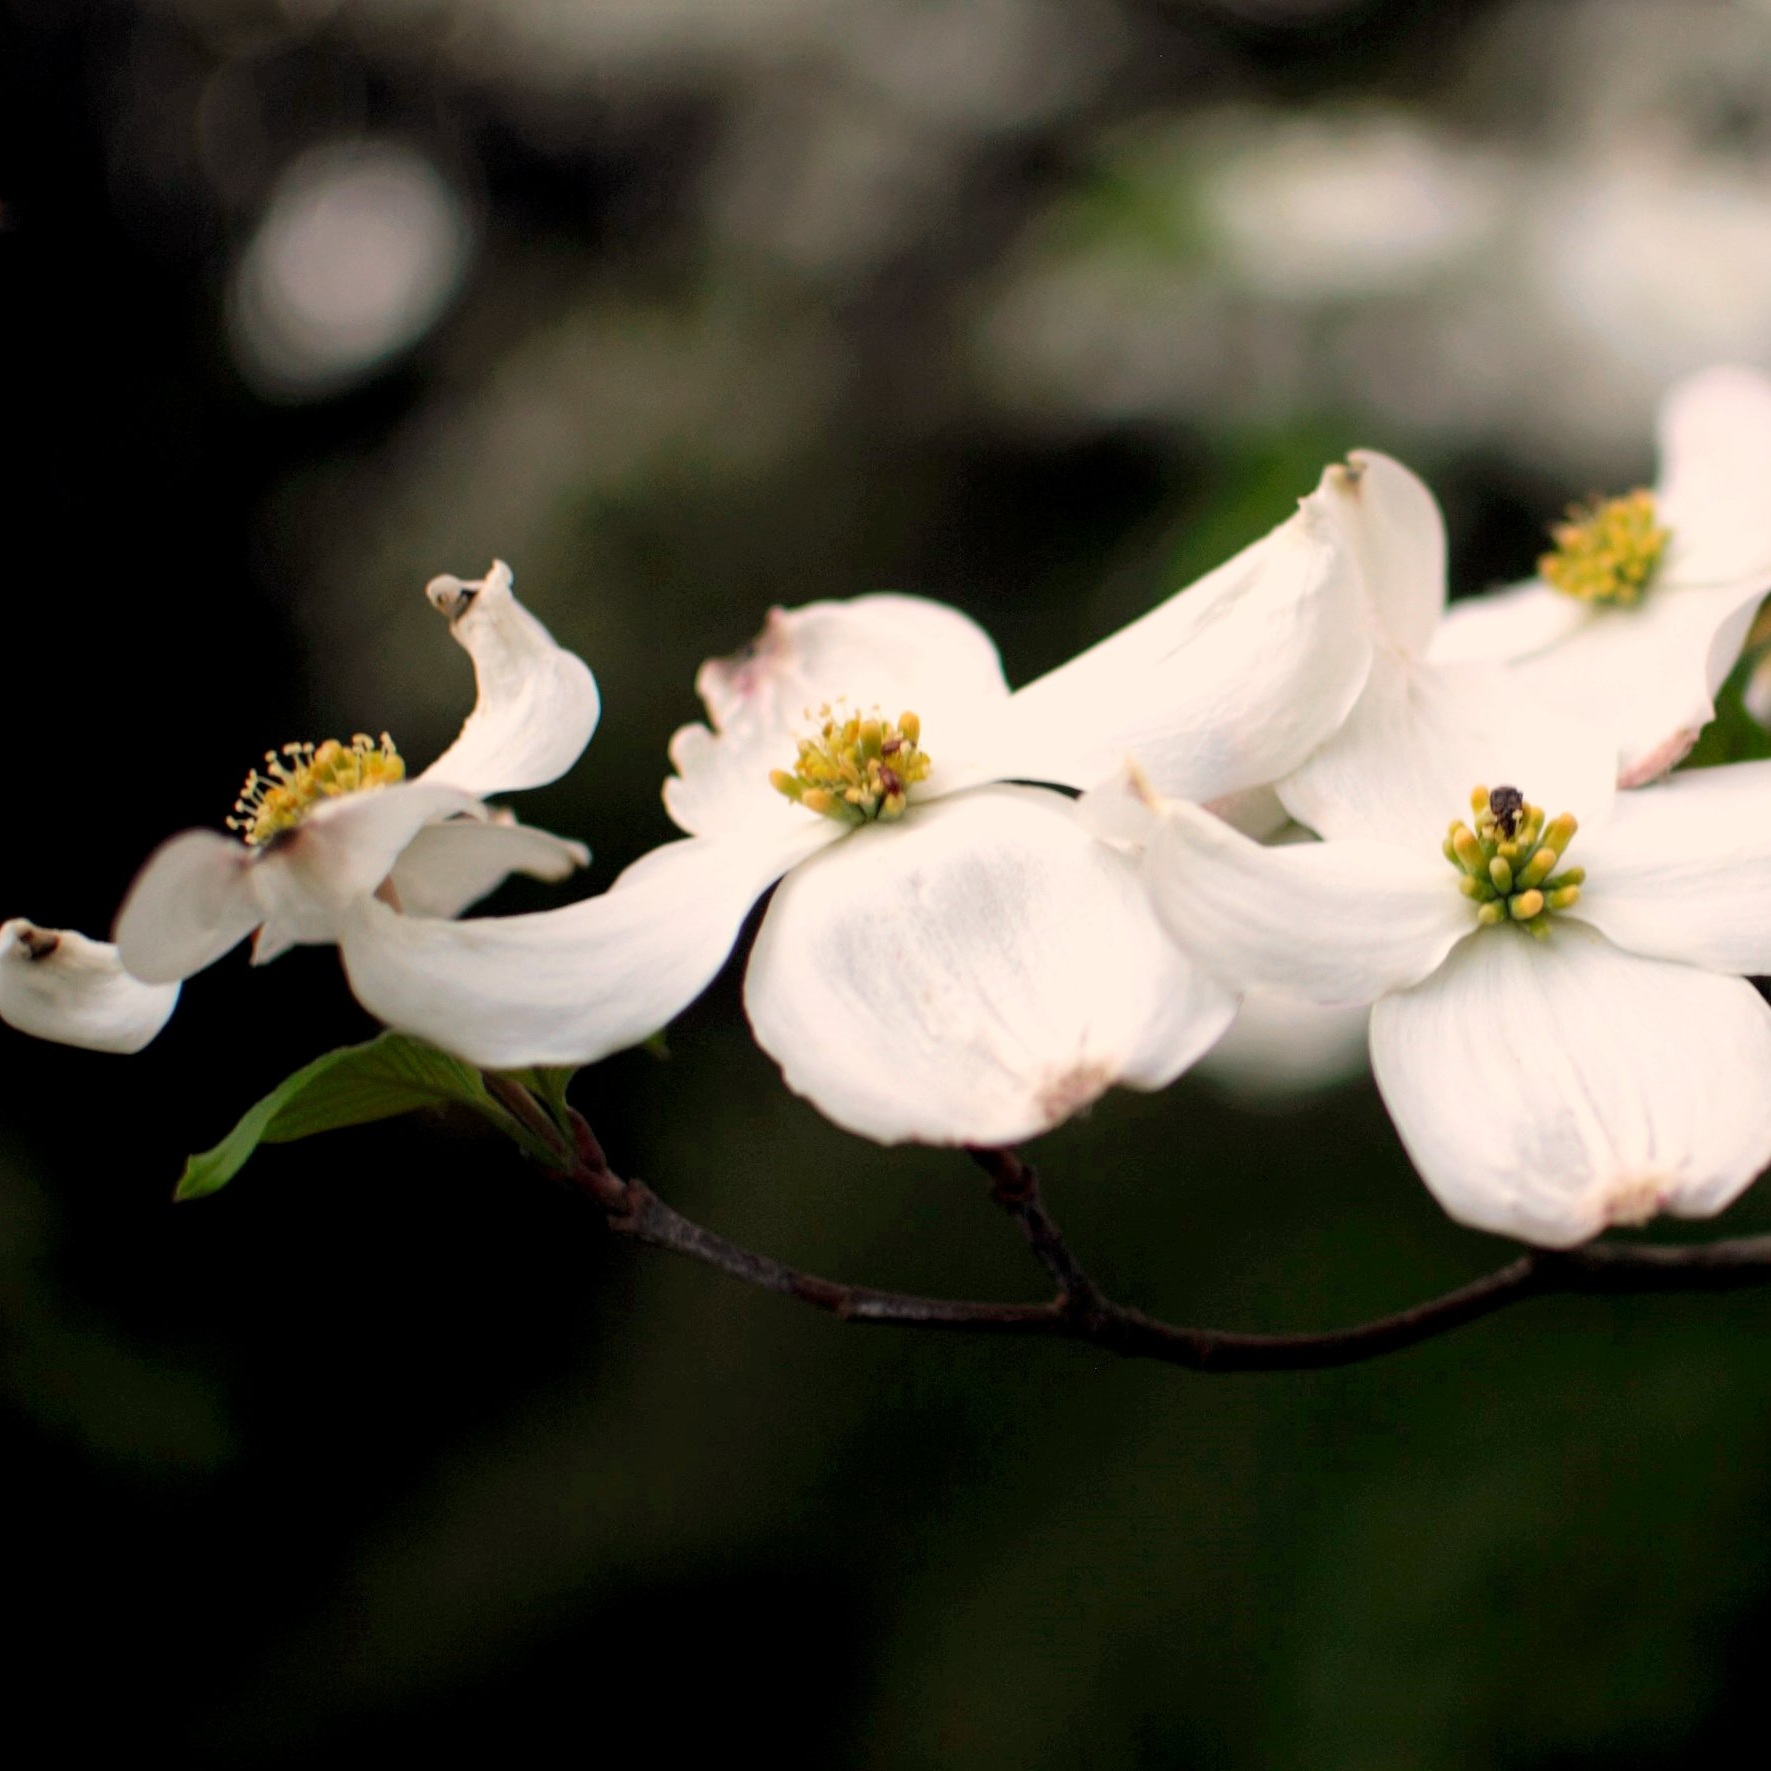 Flowering dogwood blossoms.